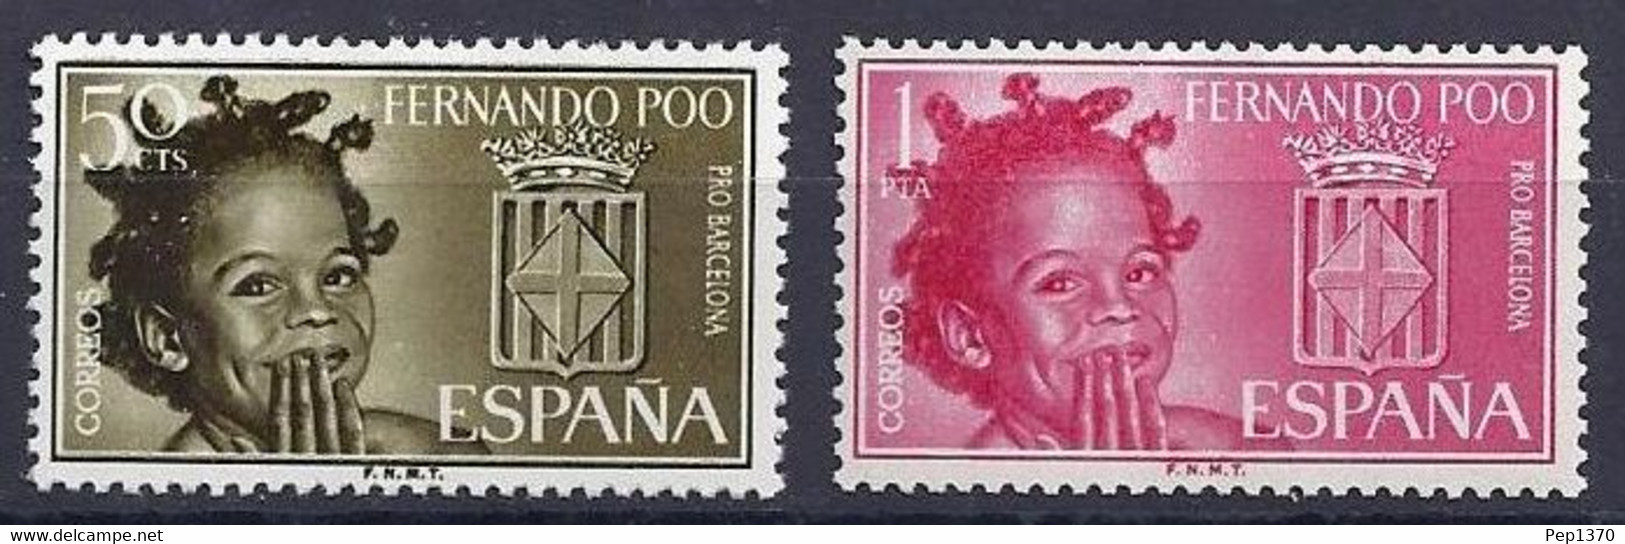 FERNANDO POO 1963 - AYUDA A BARCELONA - EDIFIL 218-219** - Fernando Poo